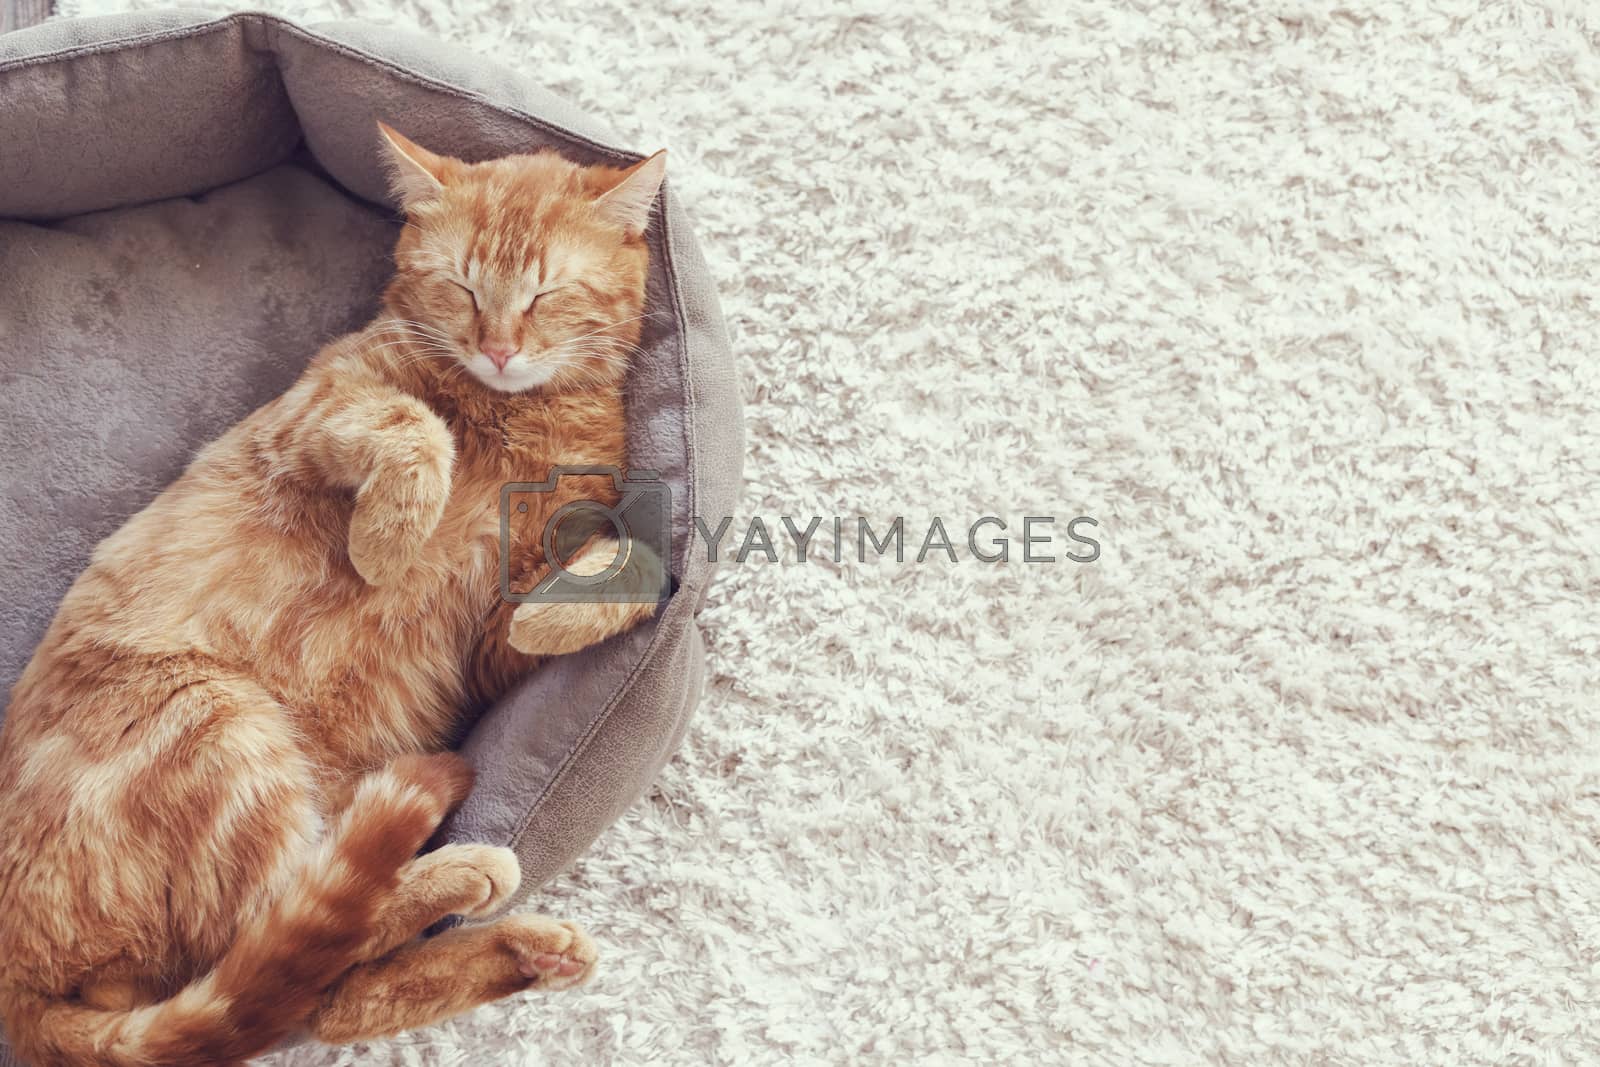 Royalty free image of Cat sleeping by alenkasm